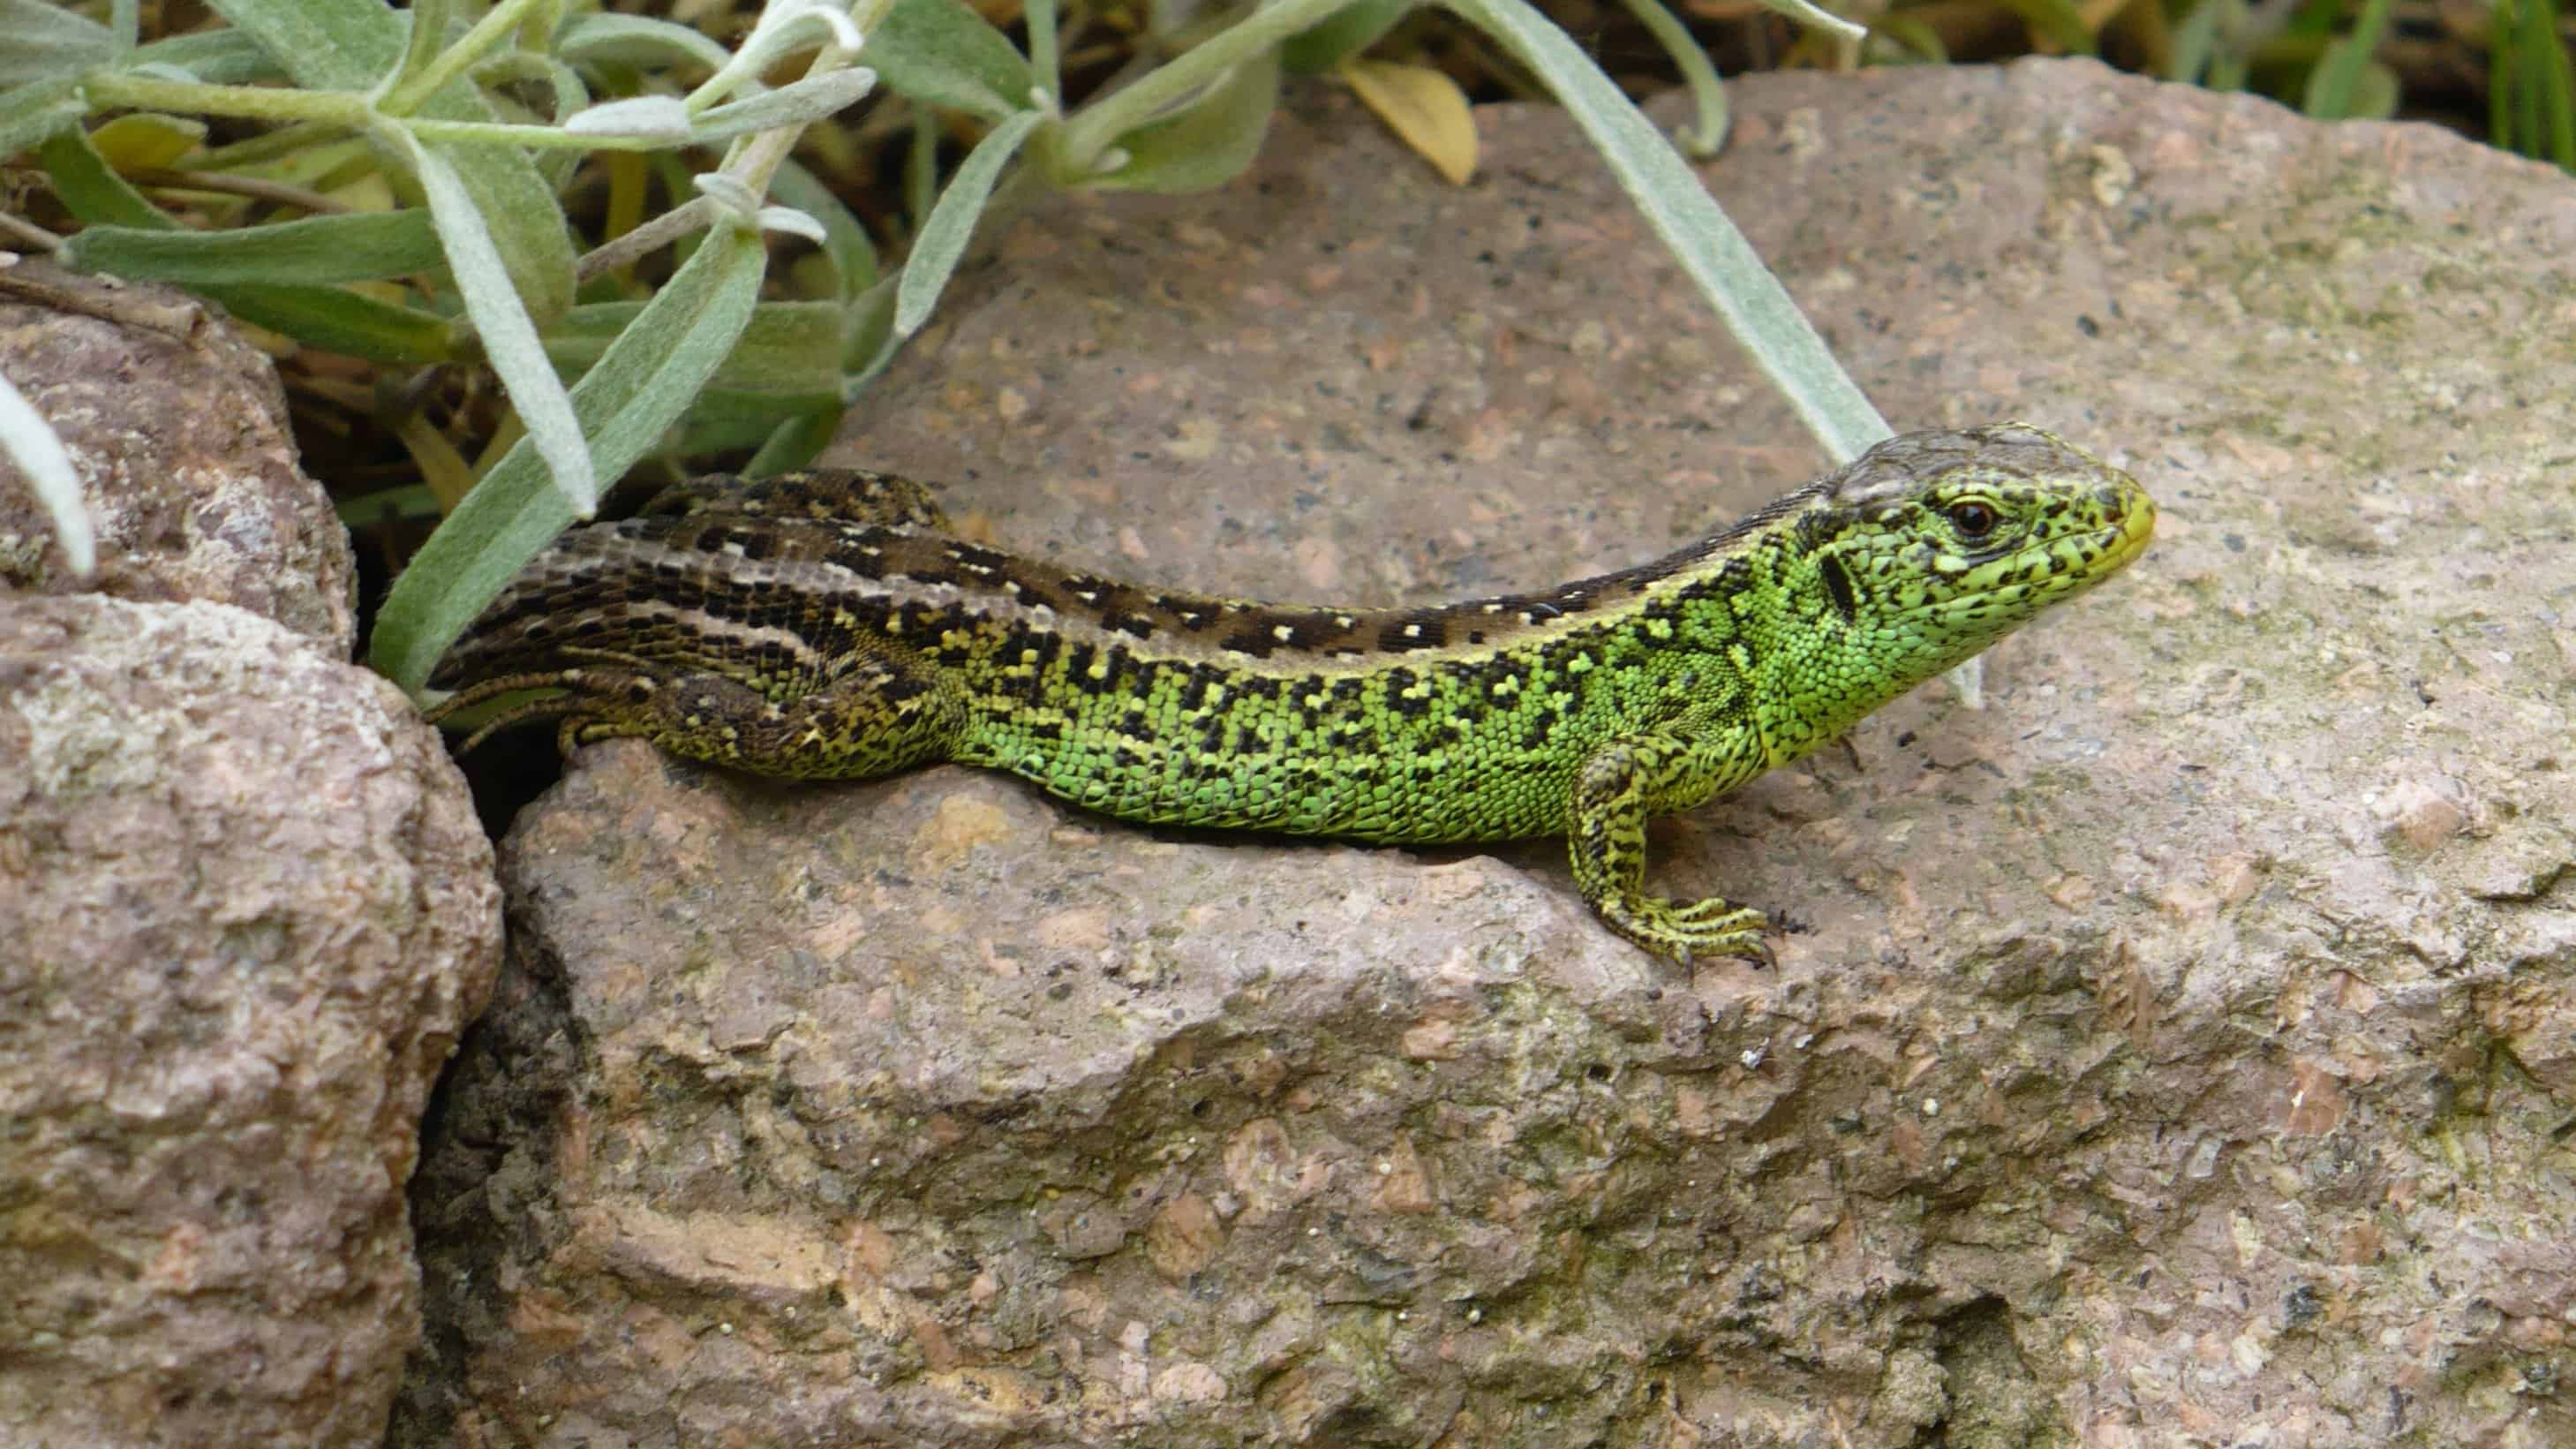 フリー写真画像 爬虫類 自然 緑のトカゲ 迷彩 野生動物 野生 動物 地面